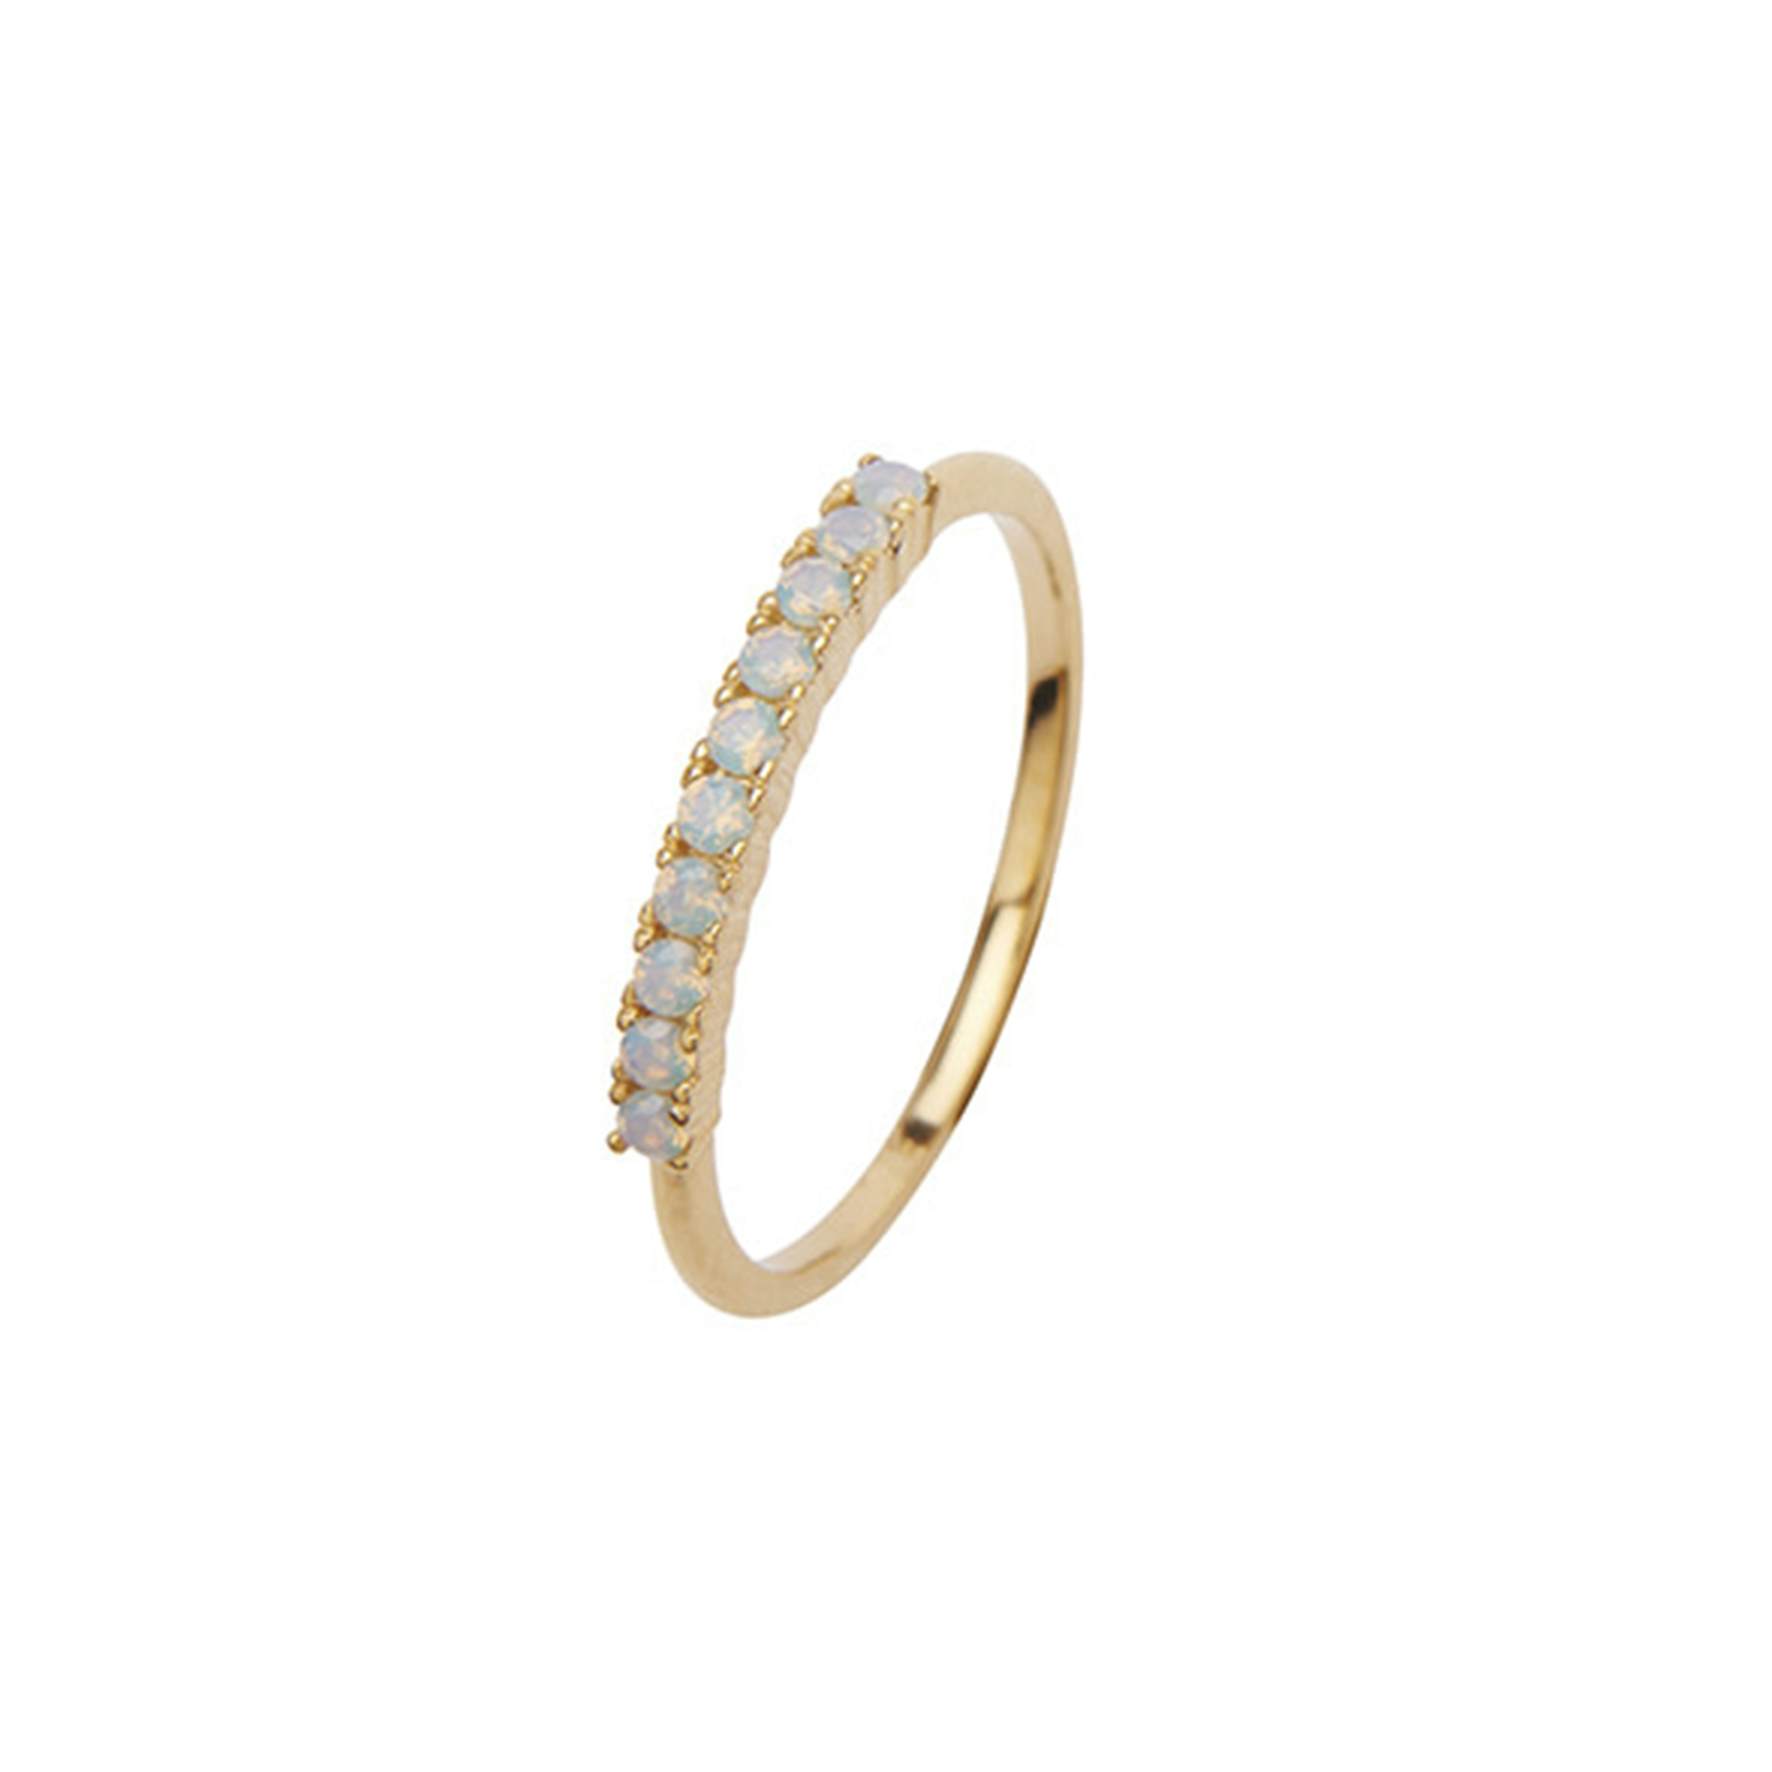 Fineley Crystal Ring von Pico in Vergoldet-Silber Sterling 925|Mint